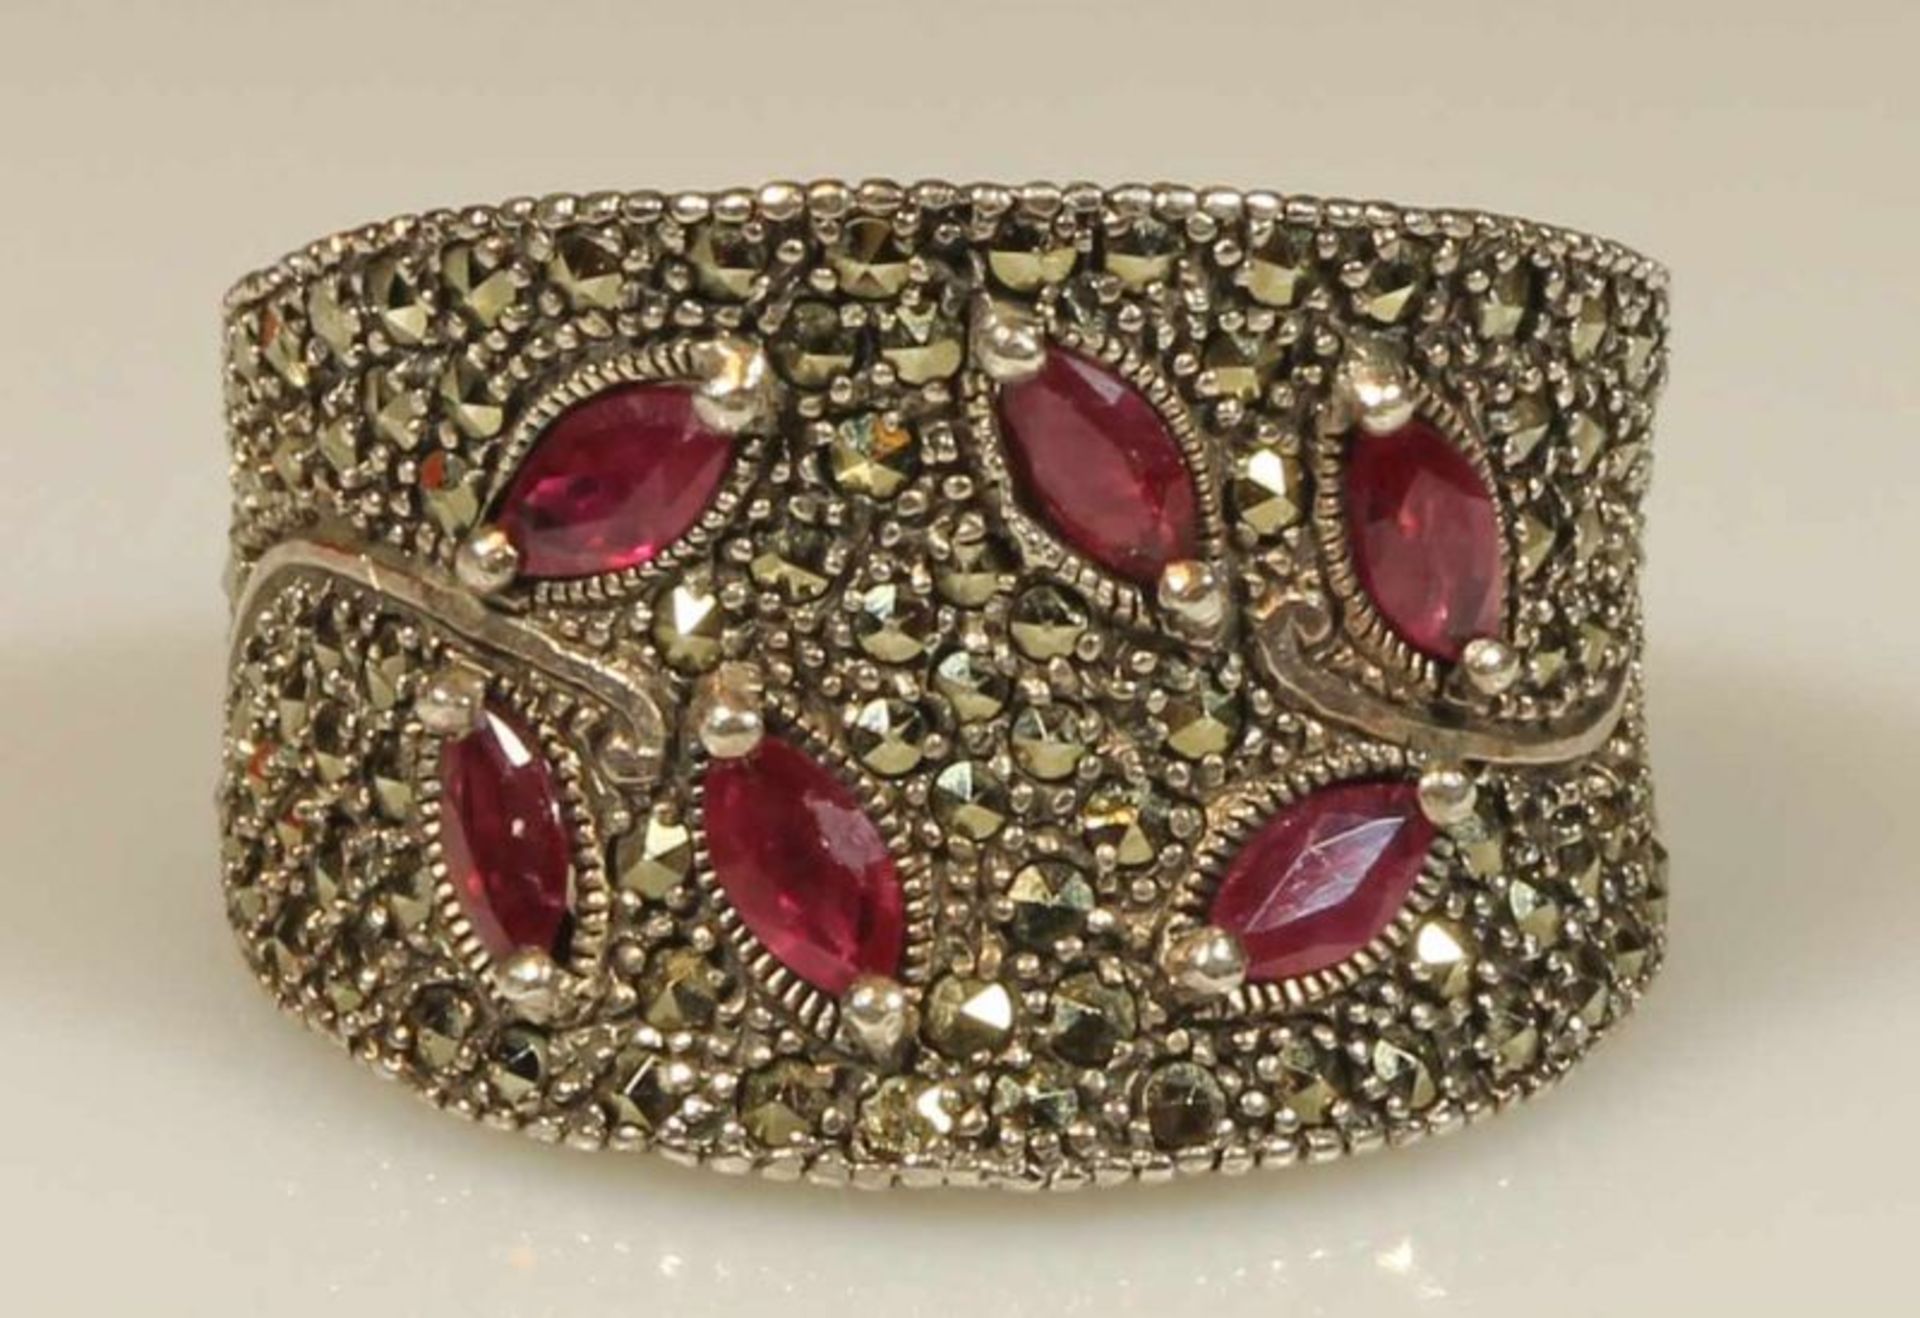 Ring, Atelierarbeit, Silber 925, floraler Dekor, 6 ovale facettierte Rubine, Markasiten, 12 g, RM